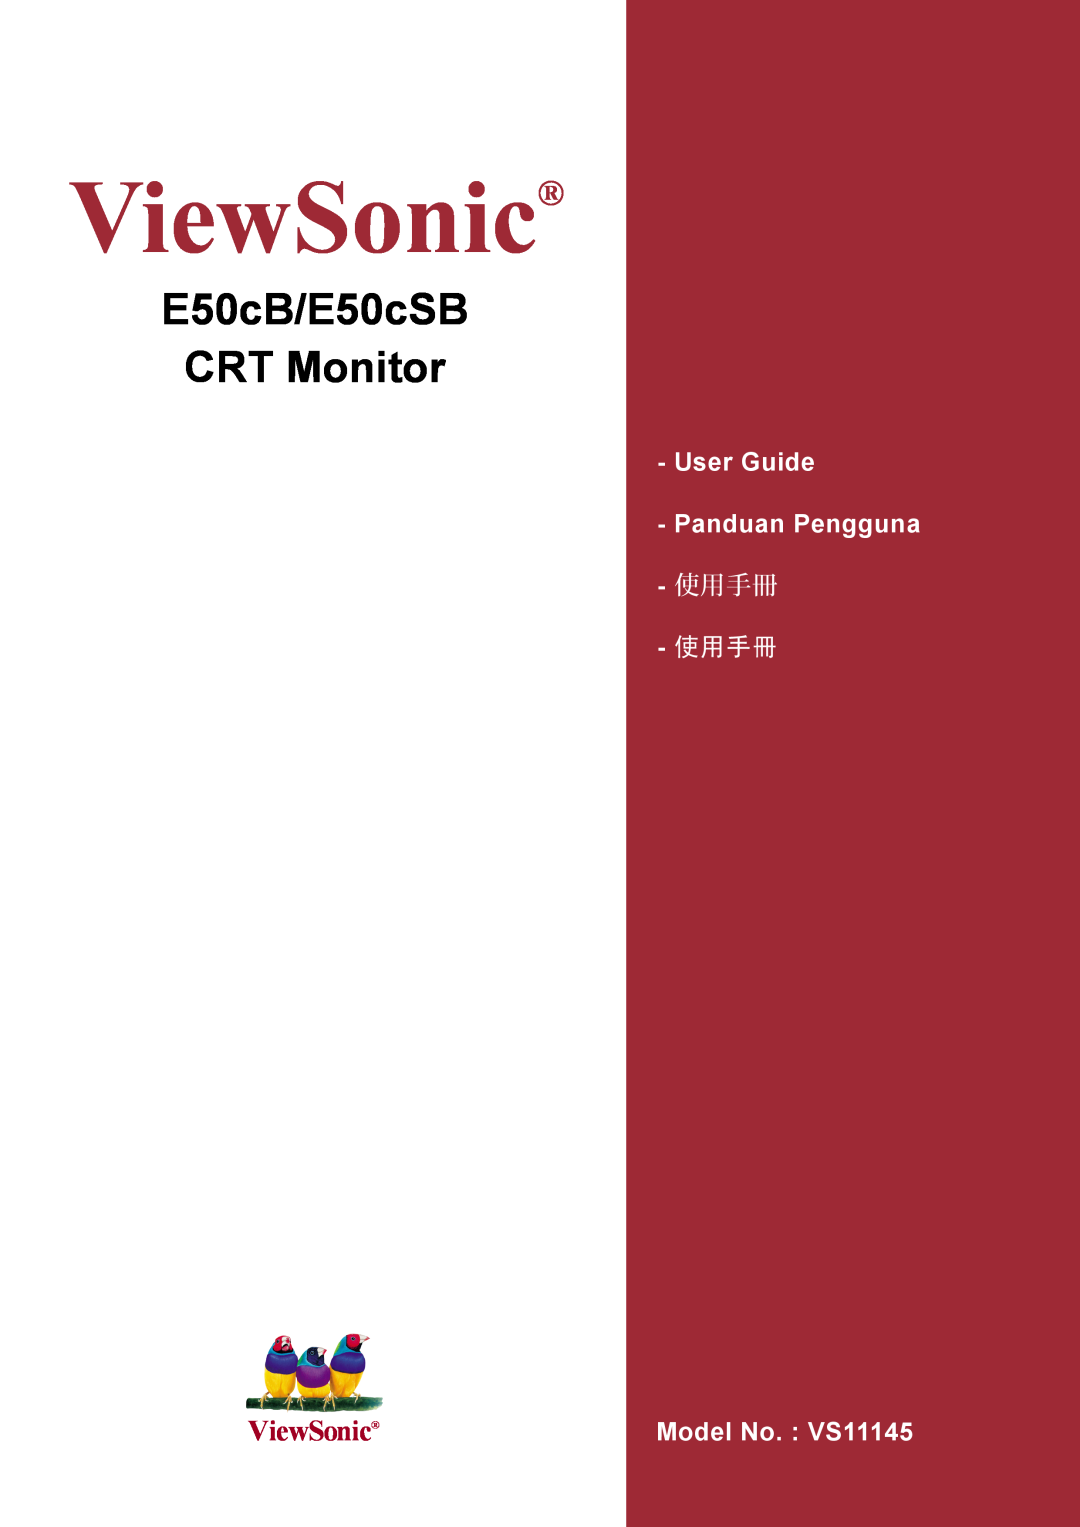 ViewSonic manual ViewSonic, E50cB/E50cSB CRT Monitor, User Guide Panduan Pengguna - 使用手冊, Model No. VS11145 